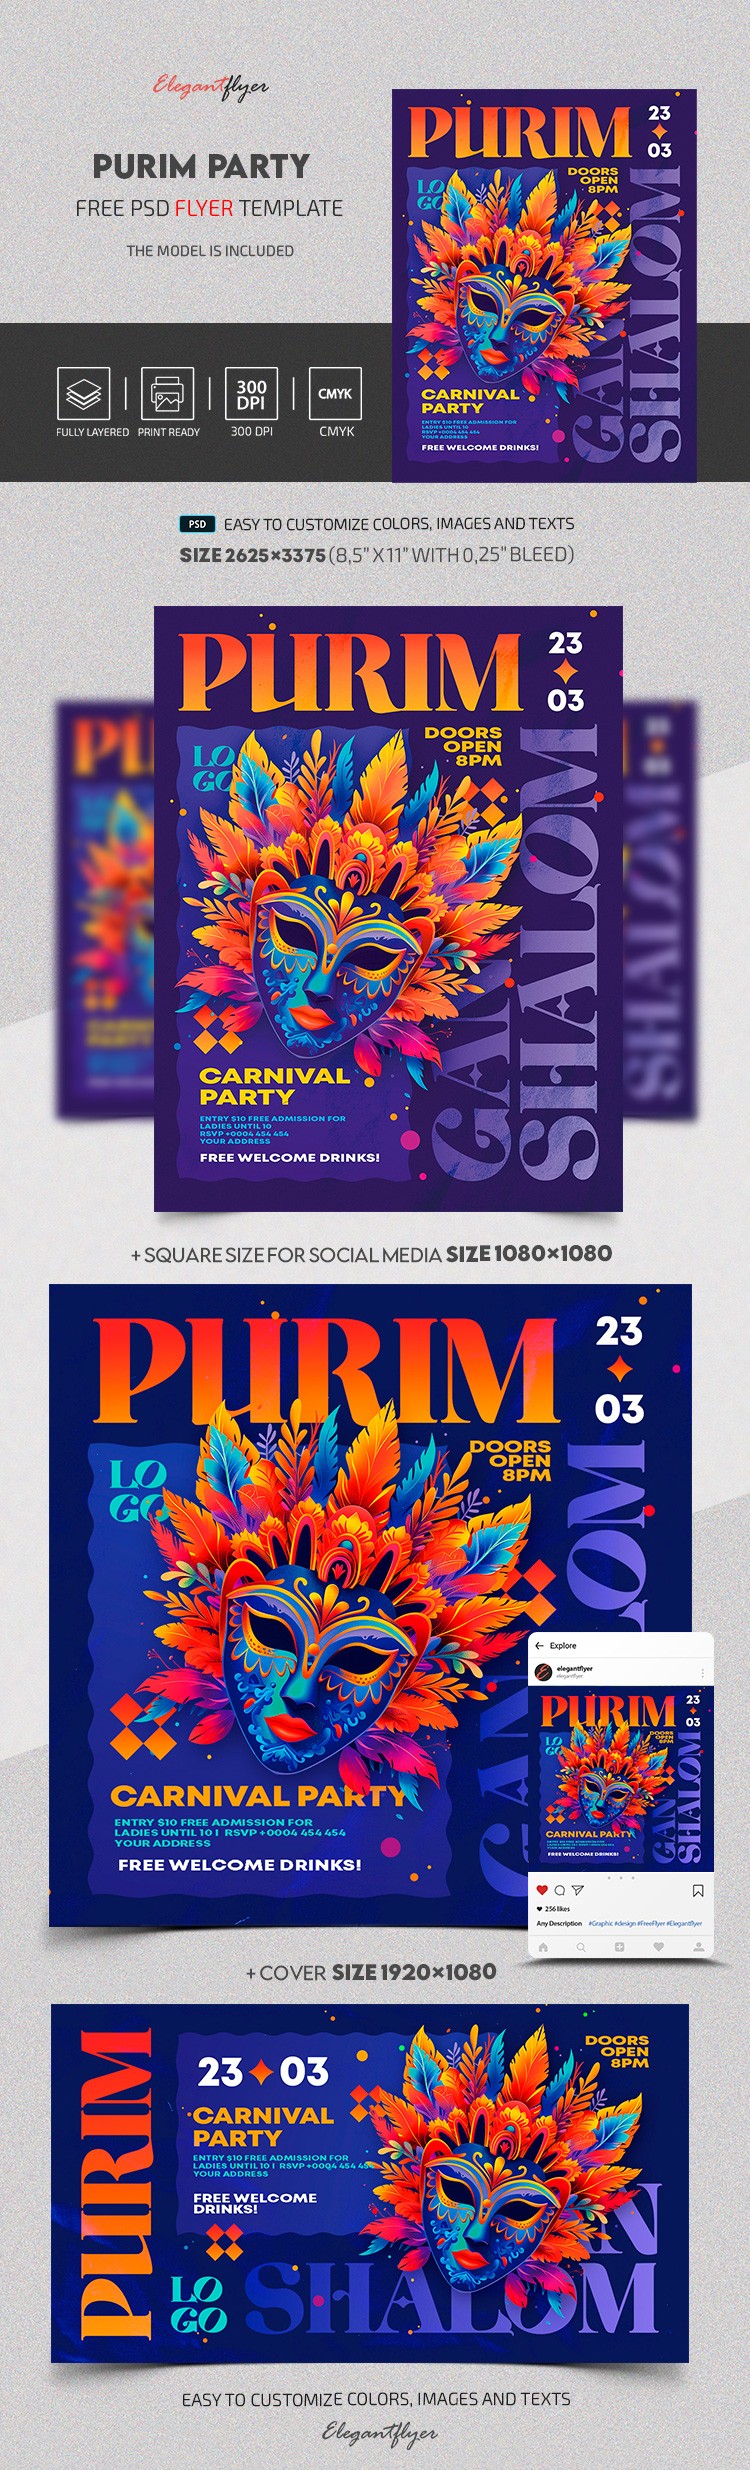 Partia Purim by ElegantFlyer